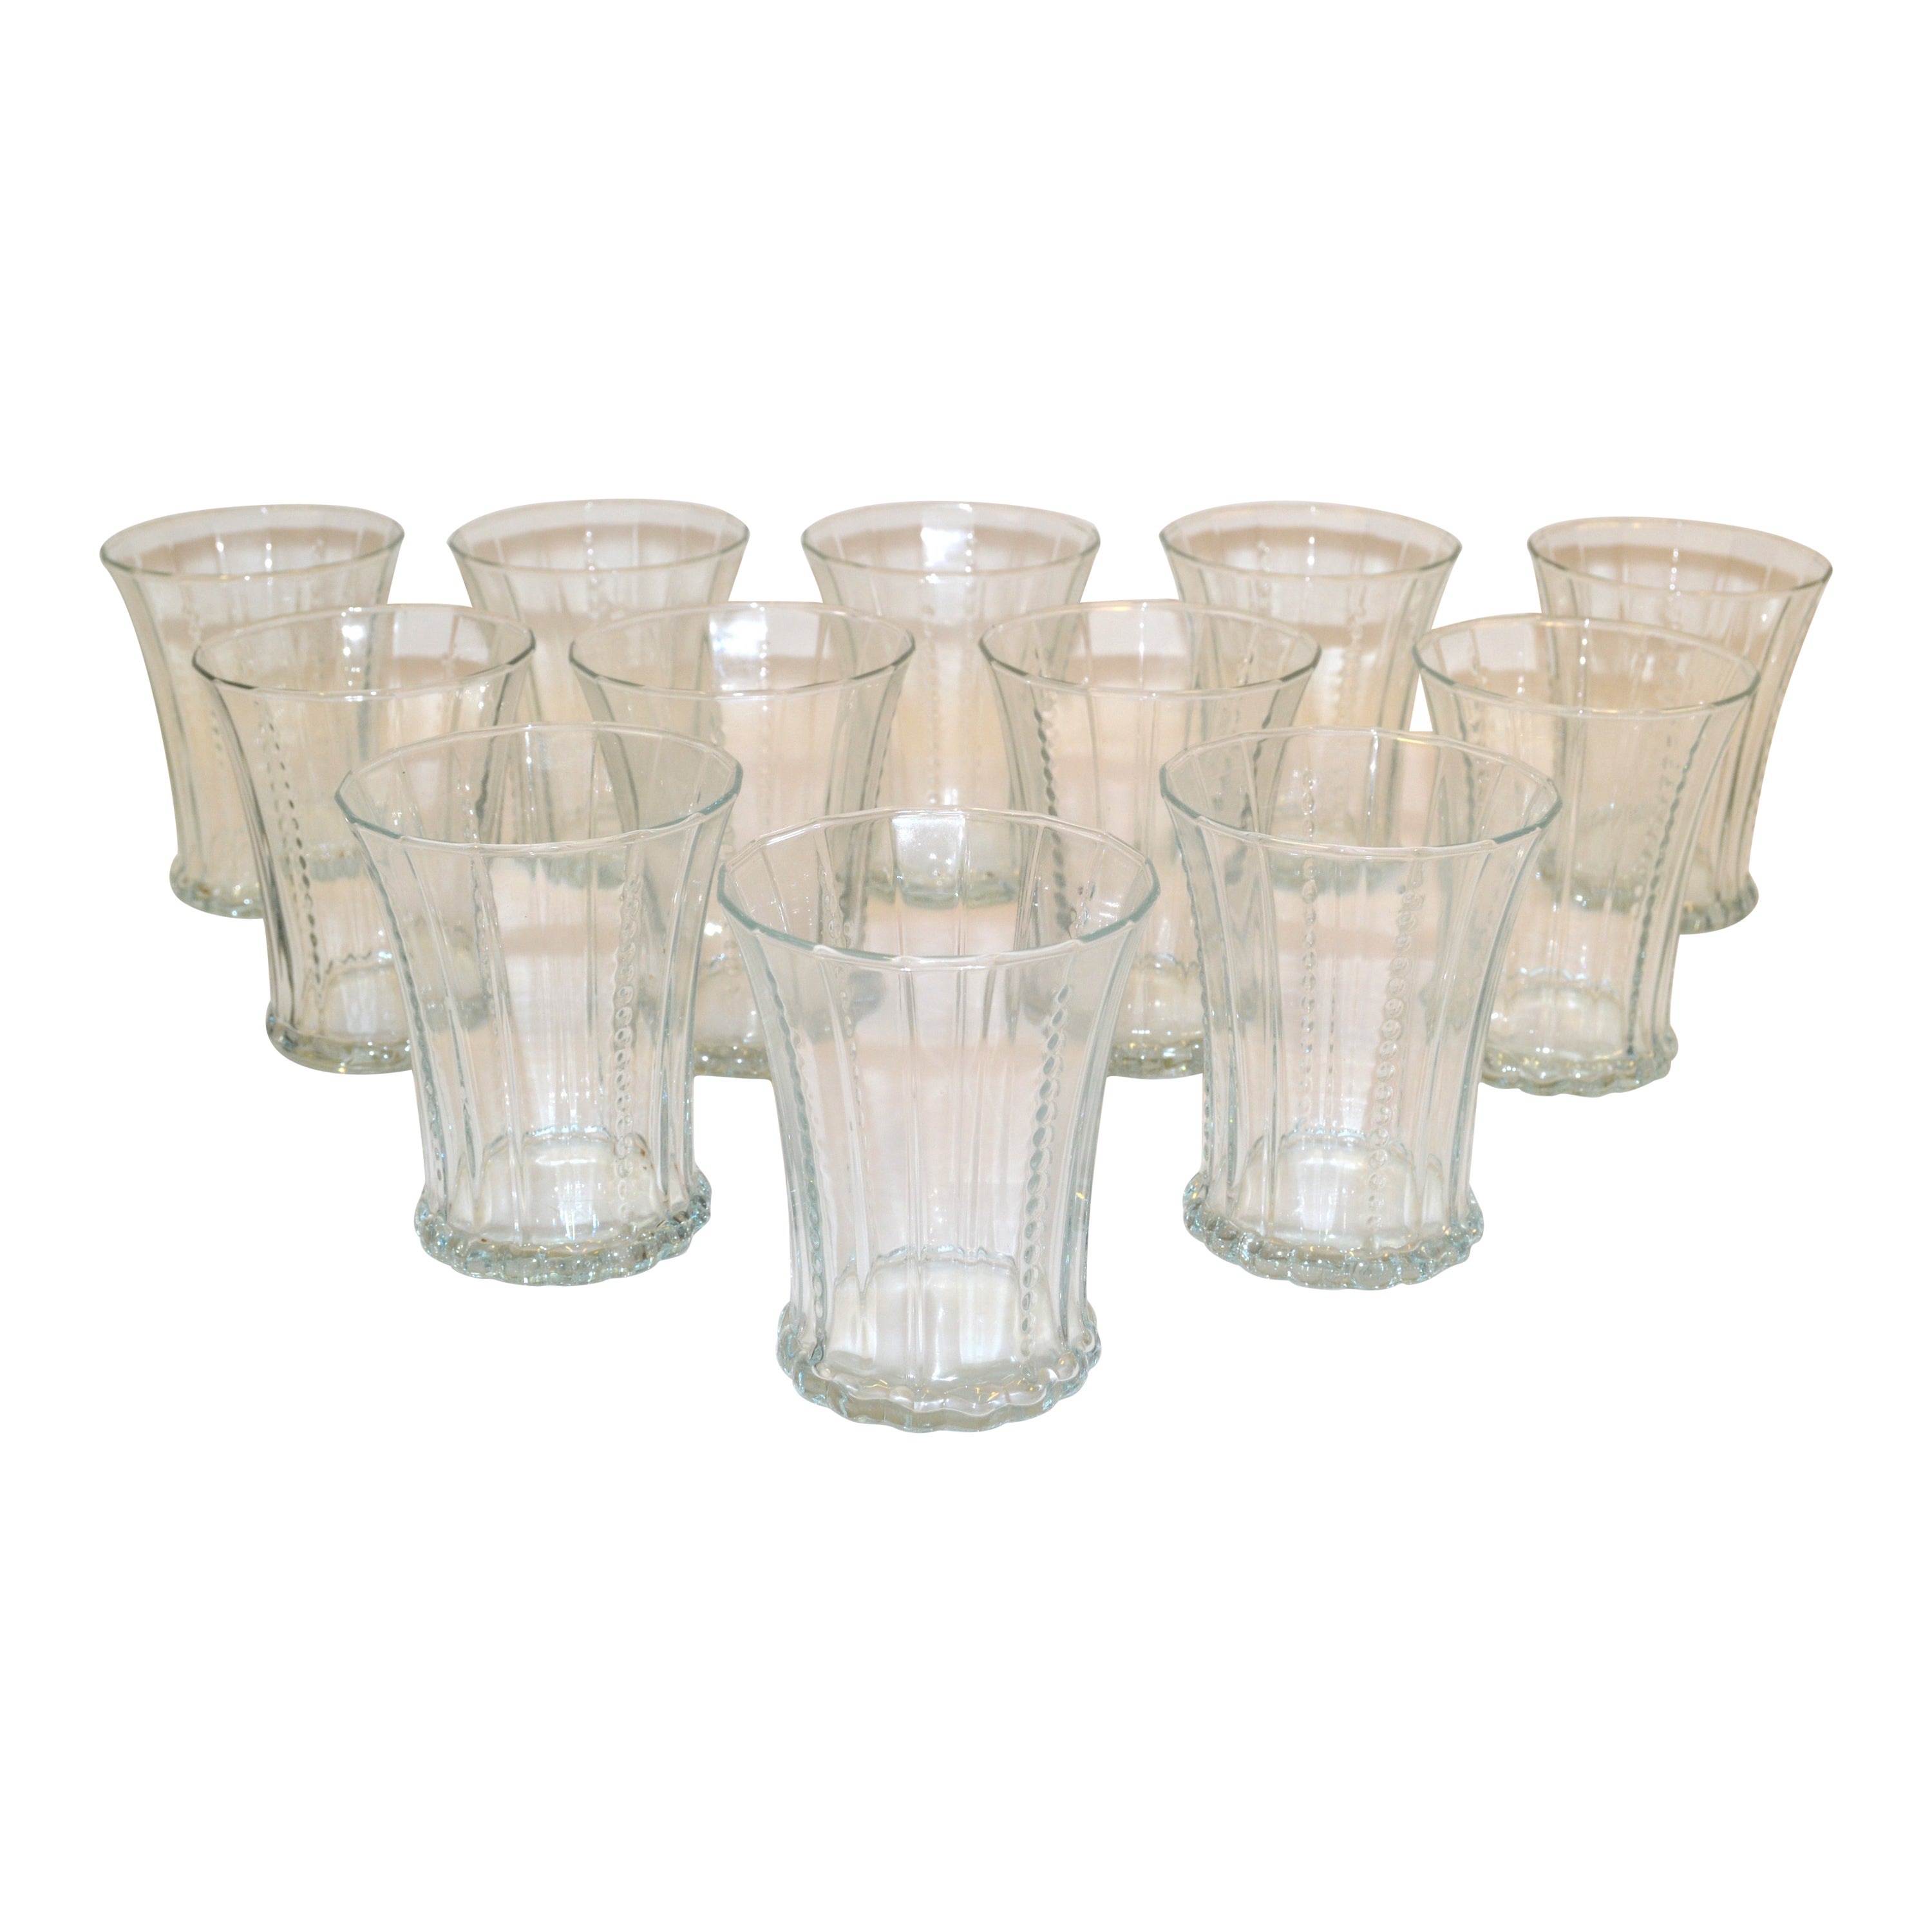 Set 12 Blown Bubble Glass Mid-Century Modern Drinking Glasses Glassware, Italy